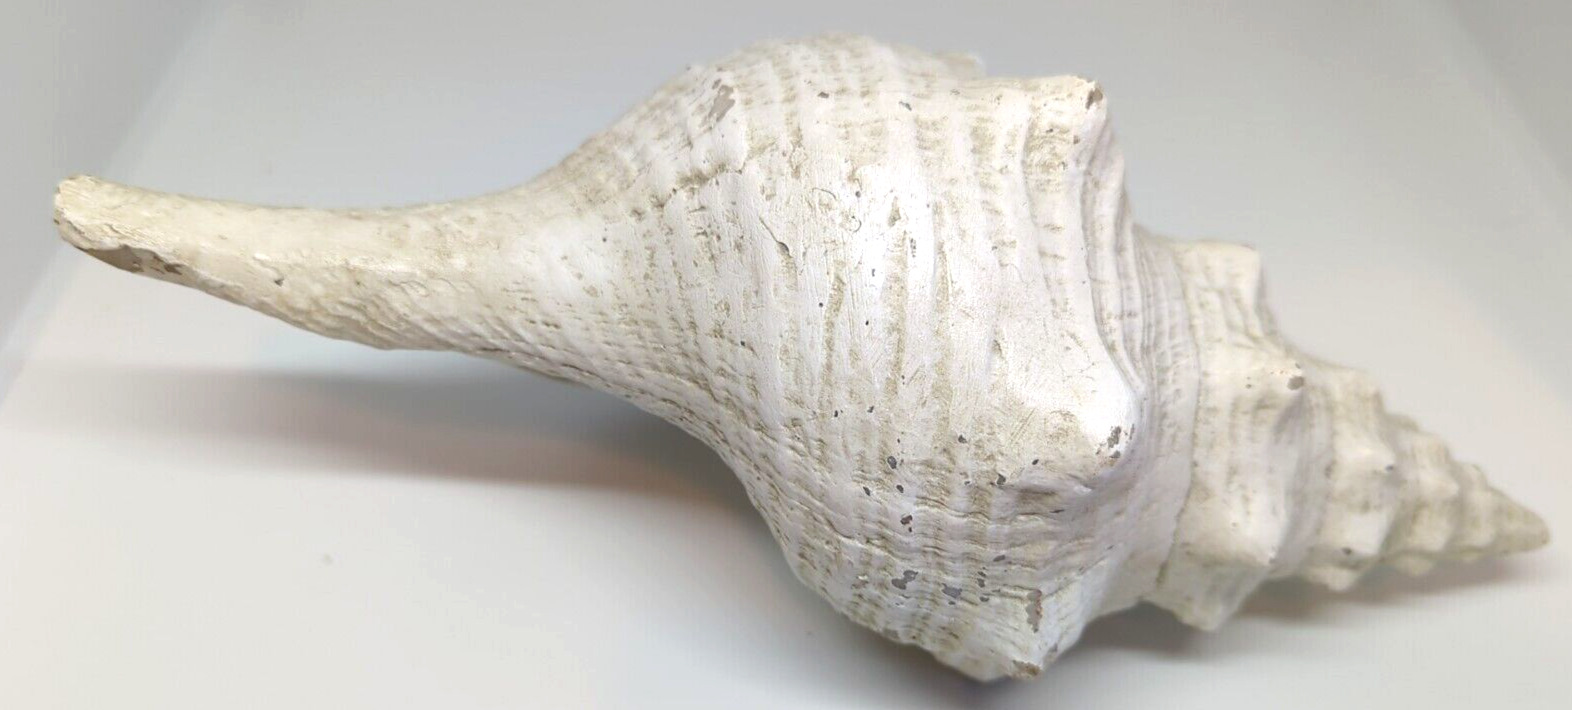 Large Horse Conch Sea Shell 12” Long Big Horn Seashell Triplofusus Giganteus